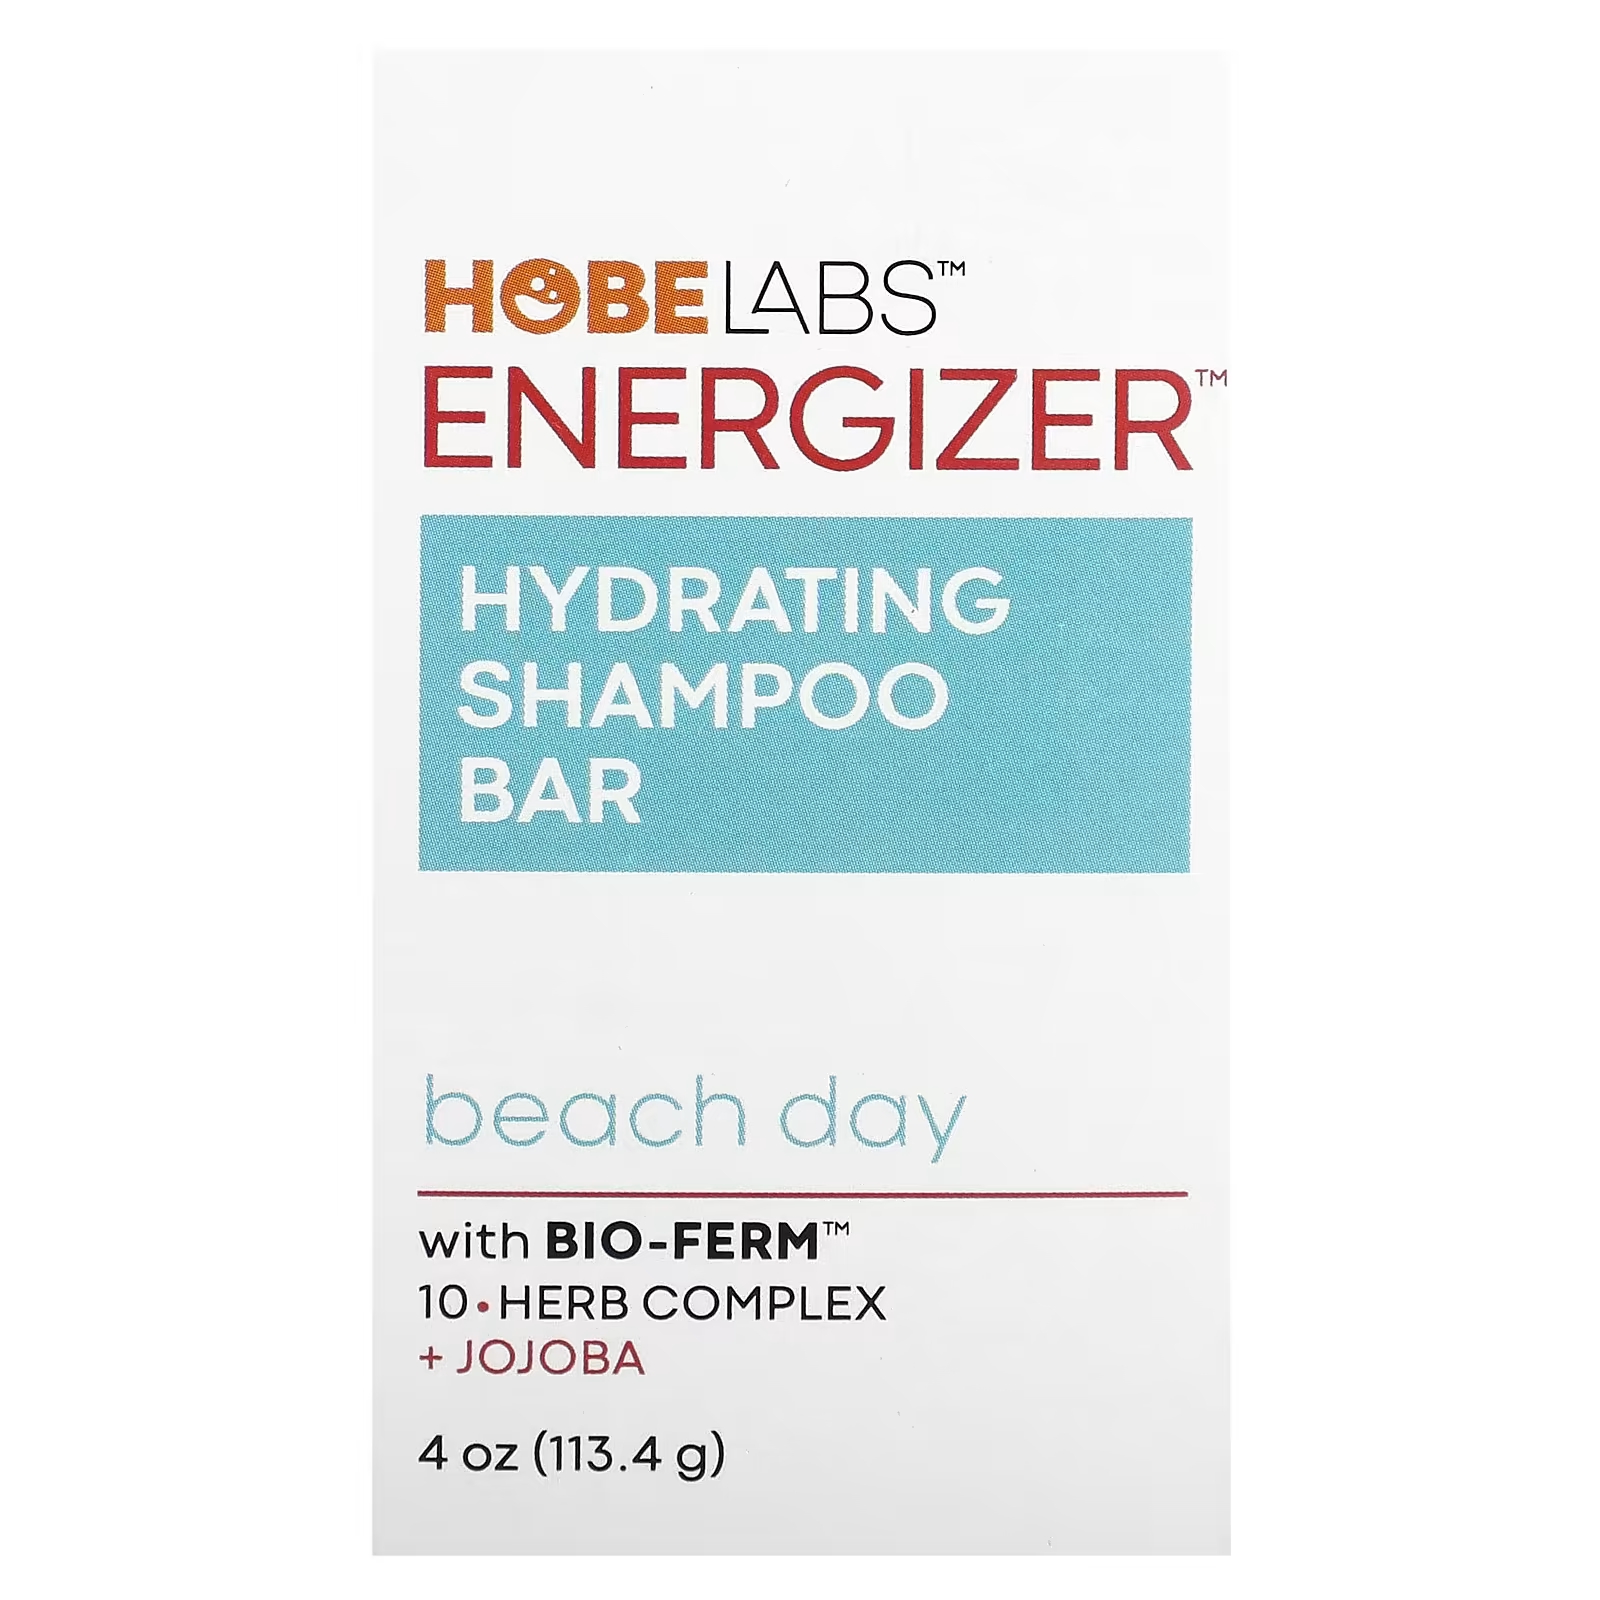 Комплекс трав Hobe Labs Energizer Hydrating Shampoo Bar Beach Day energizer hobe labs стимулятор роста волос 237 мл спрей